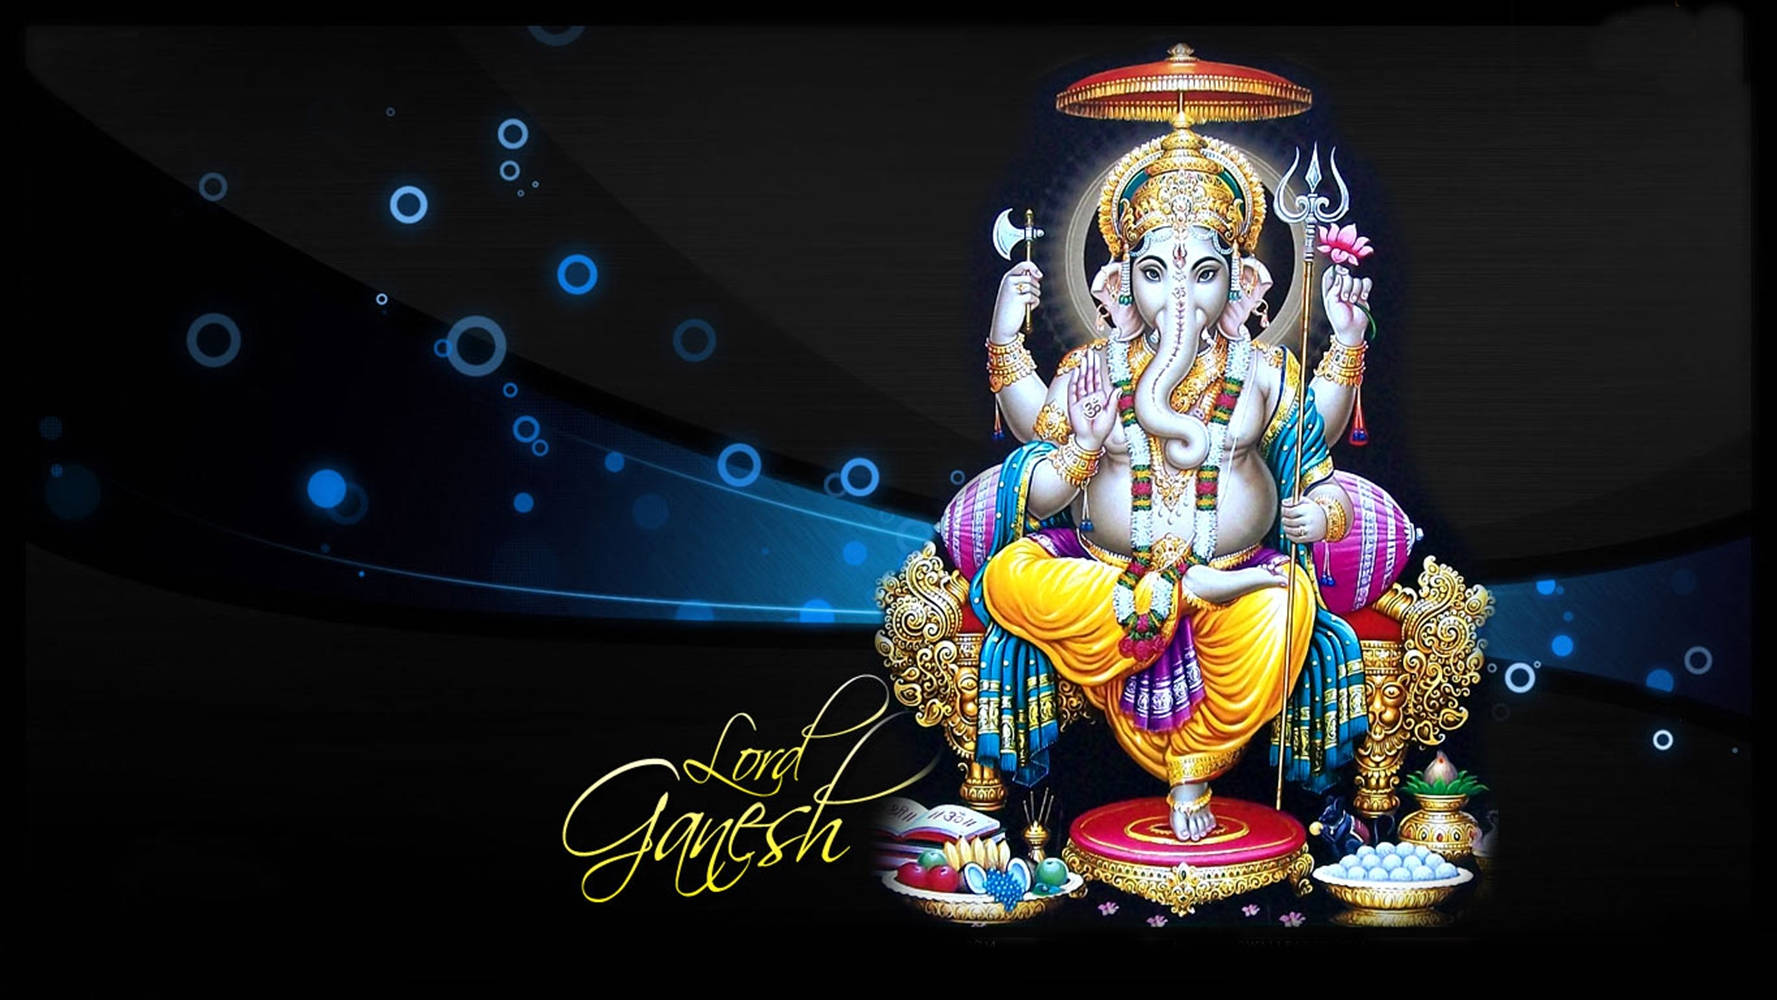 Free Ganesh Wallpaper Downloads, [400+] Ganesh Wallpapers for FREE |  